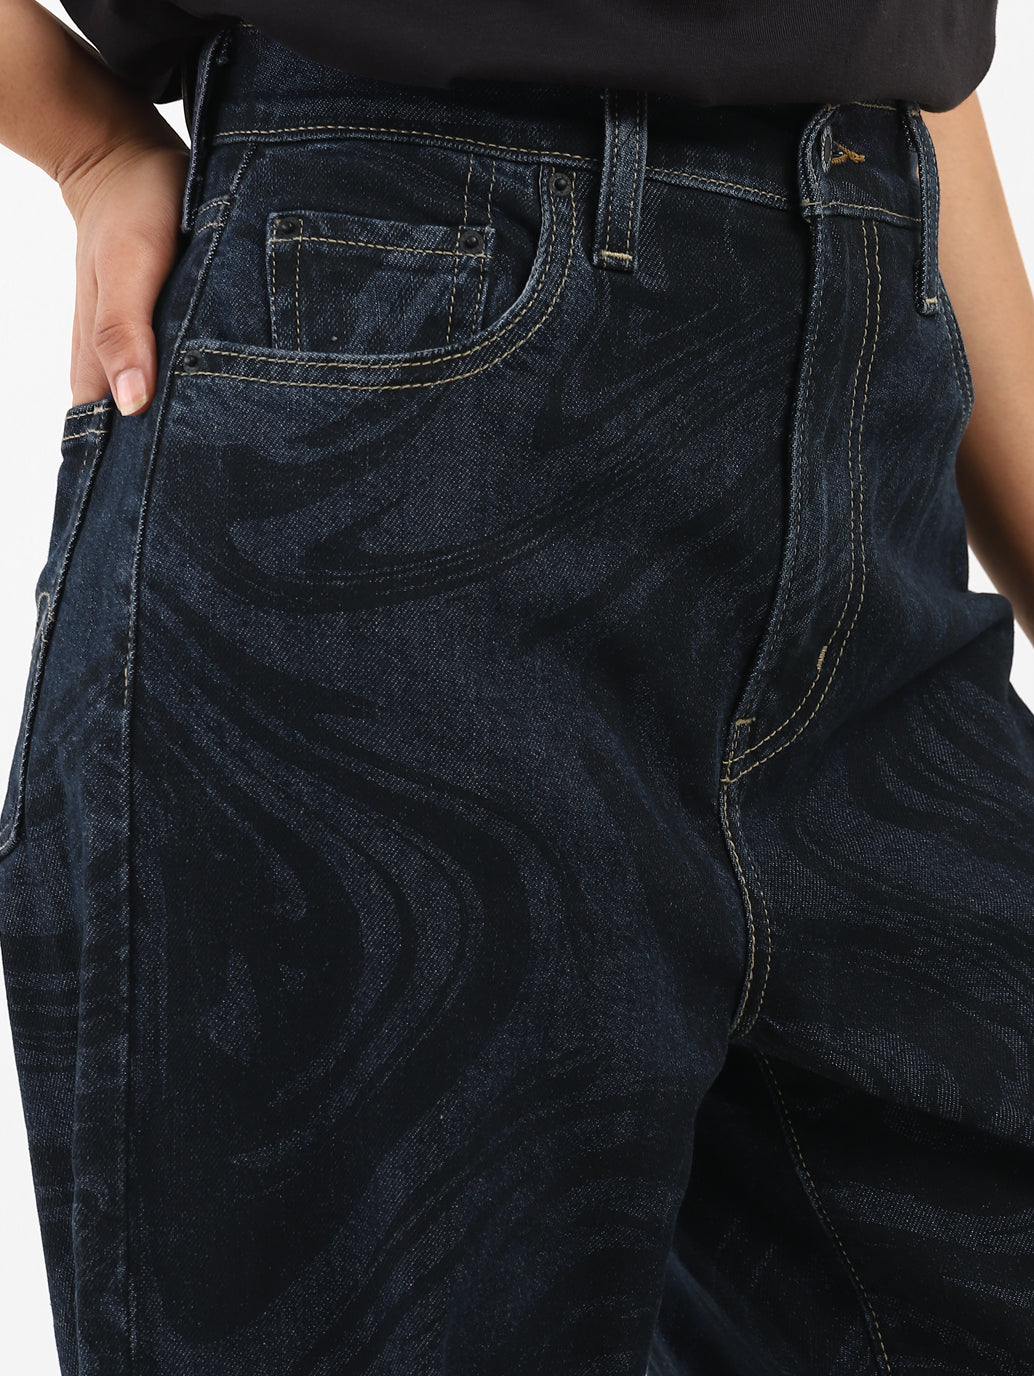 Levi's x Deepika Padukone High Rise Tapered Fit Jeans